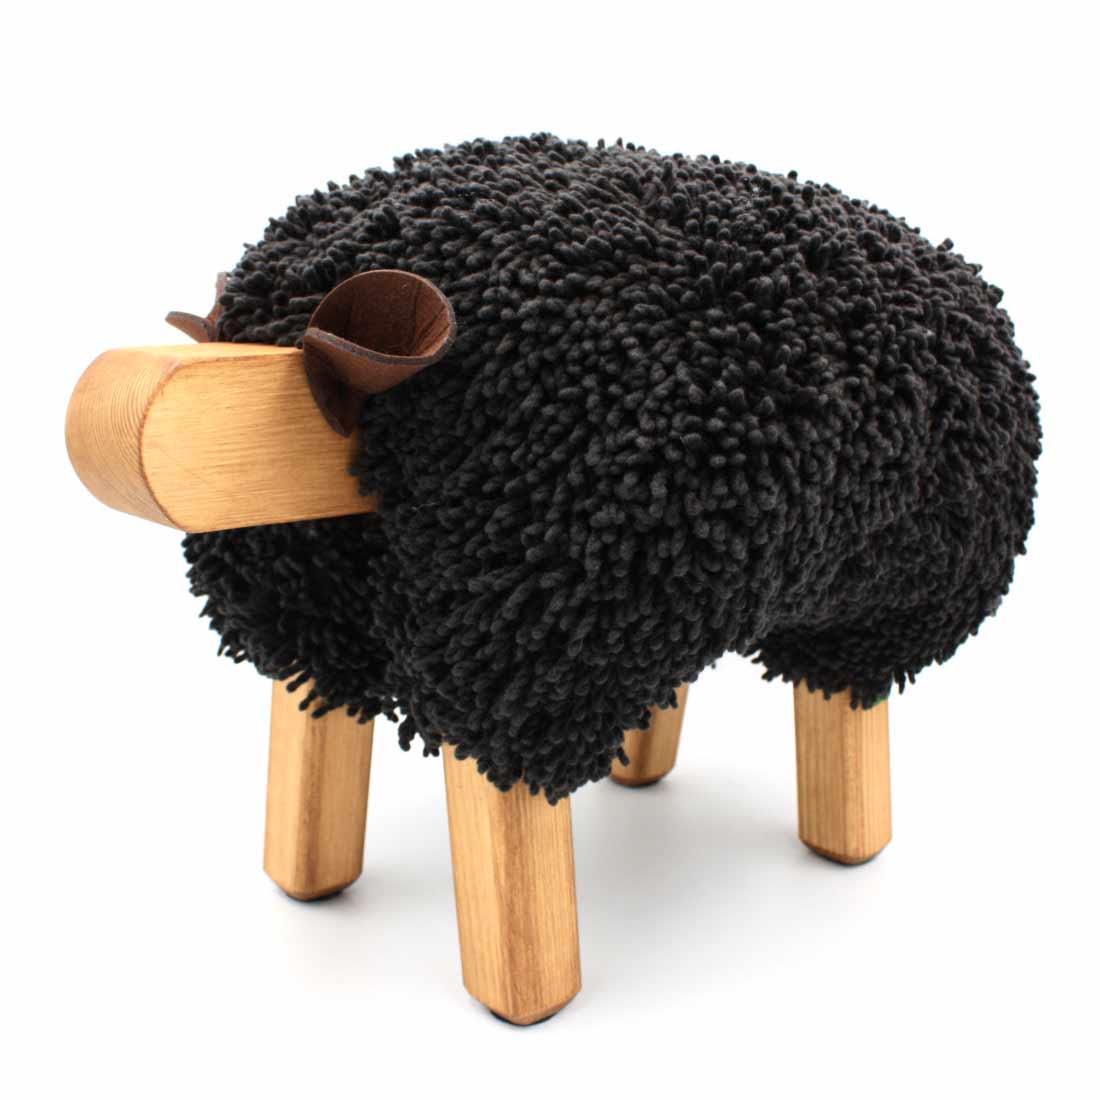 Foot Rest - Welsh Sheep - Original Ewemoo - Black